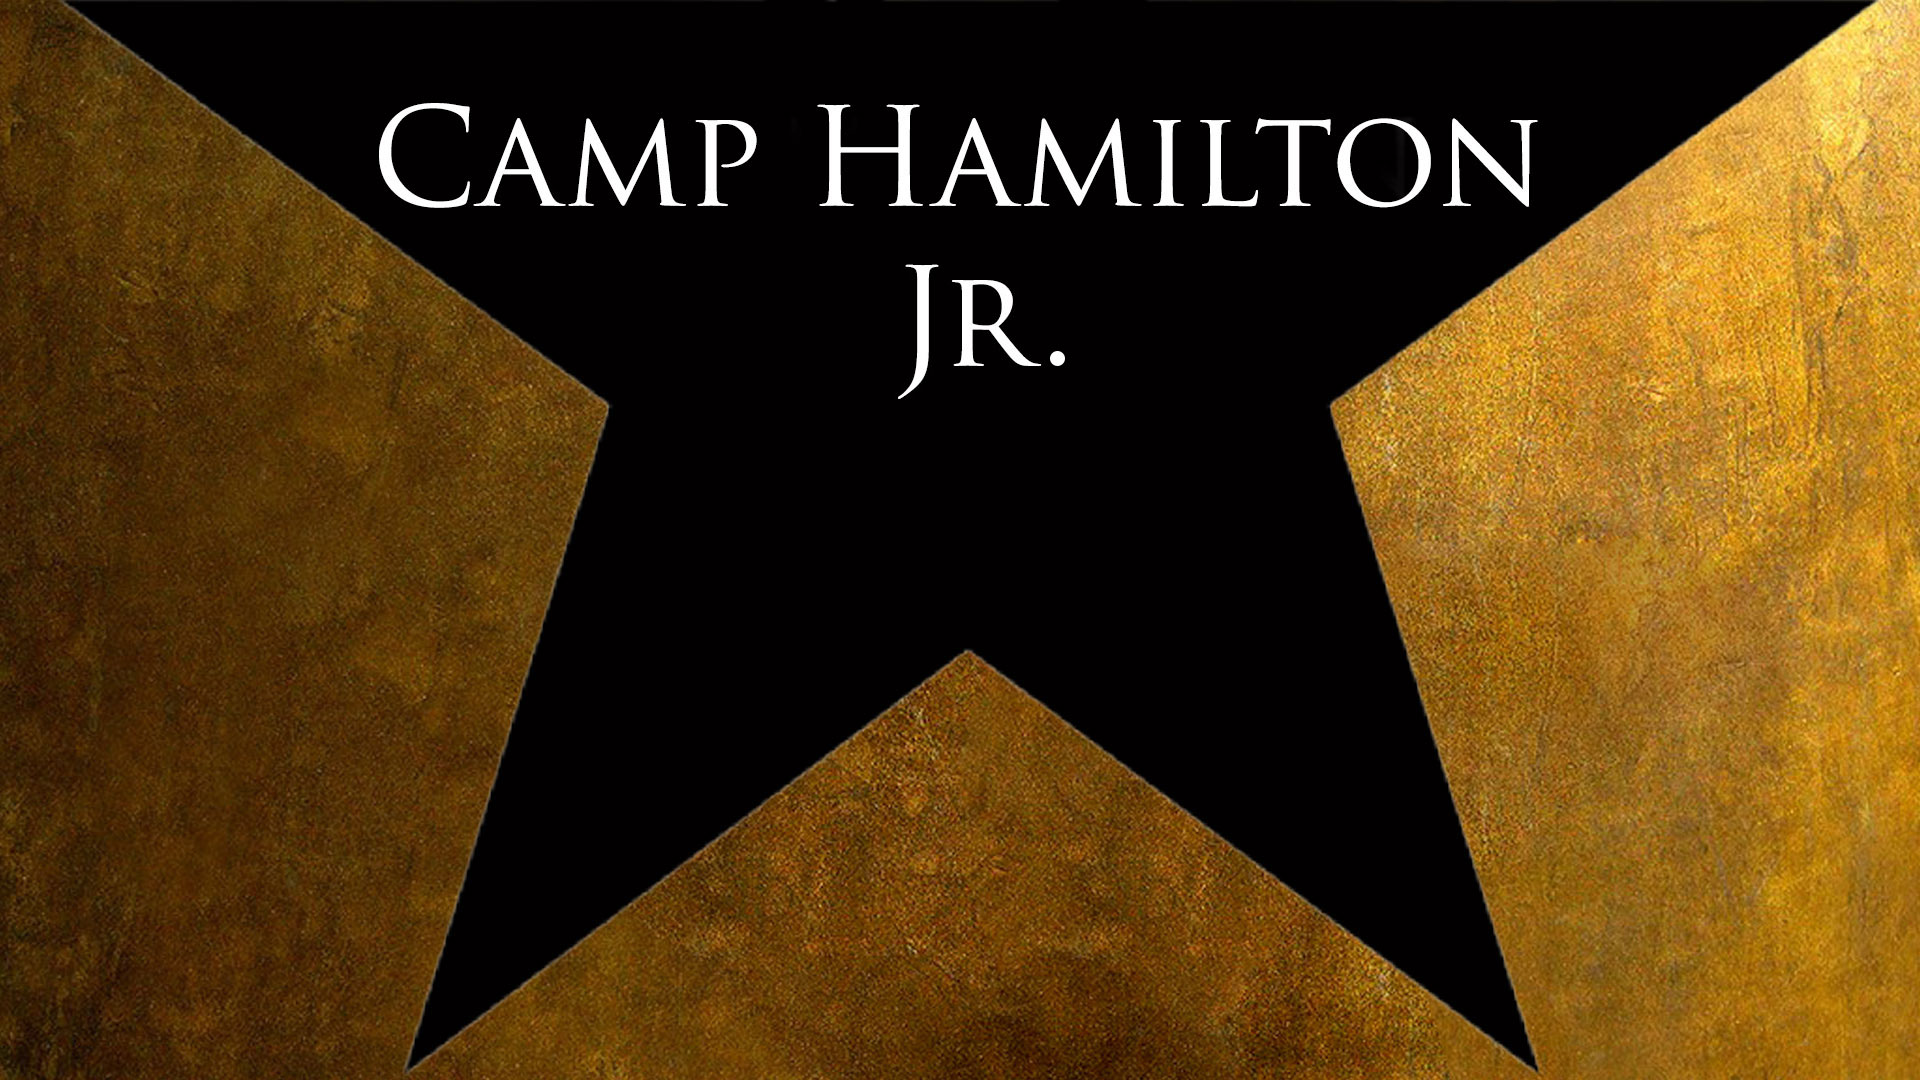 Camp Hamilton, Jr.